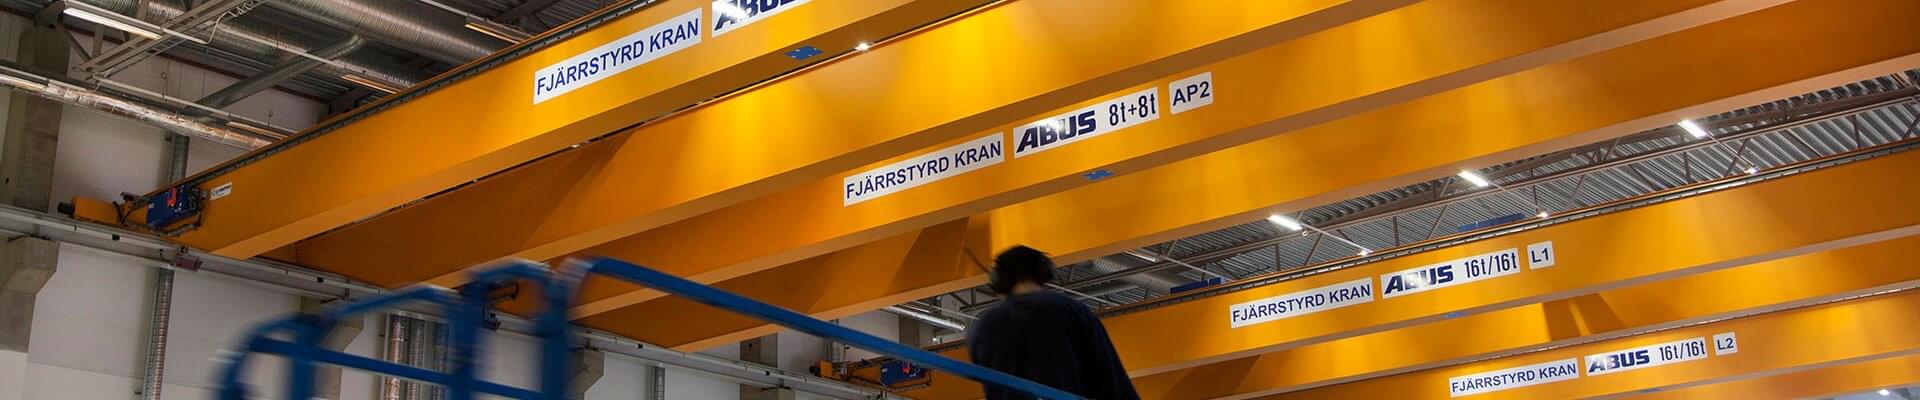 ABUS cranes in metal forming industry in Sweden